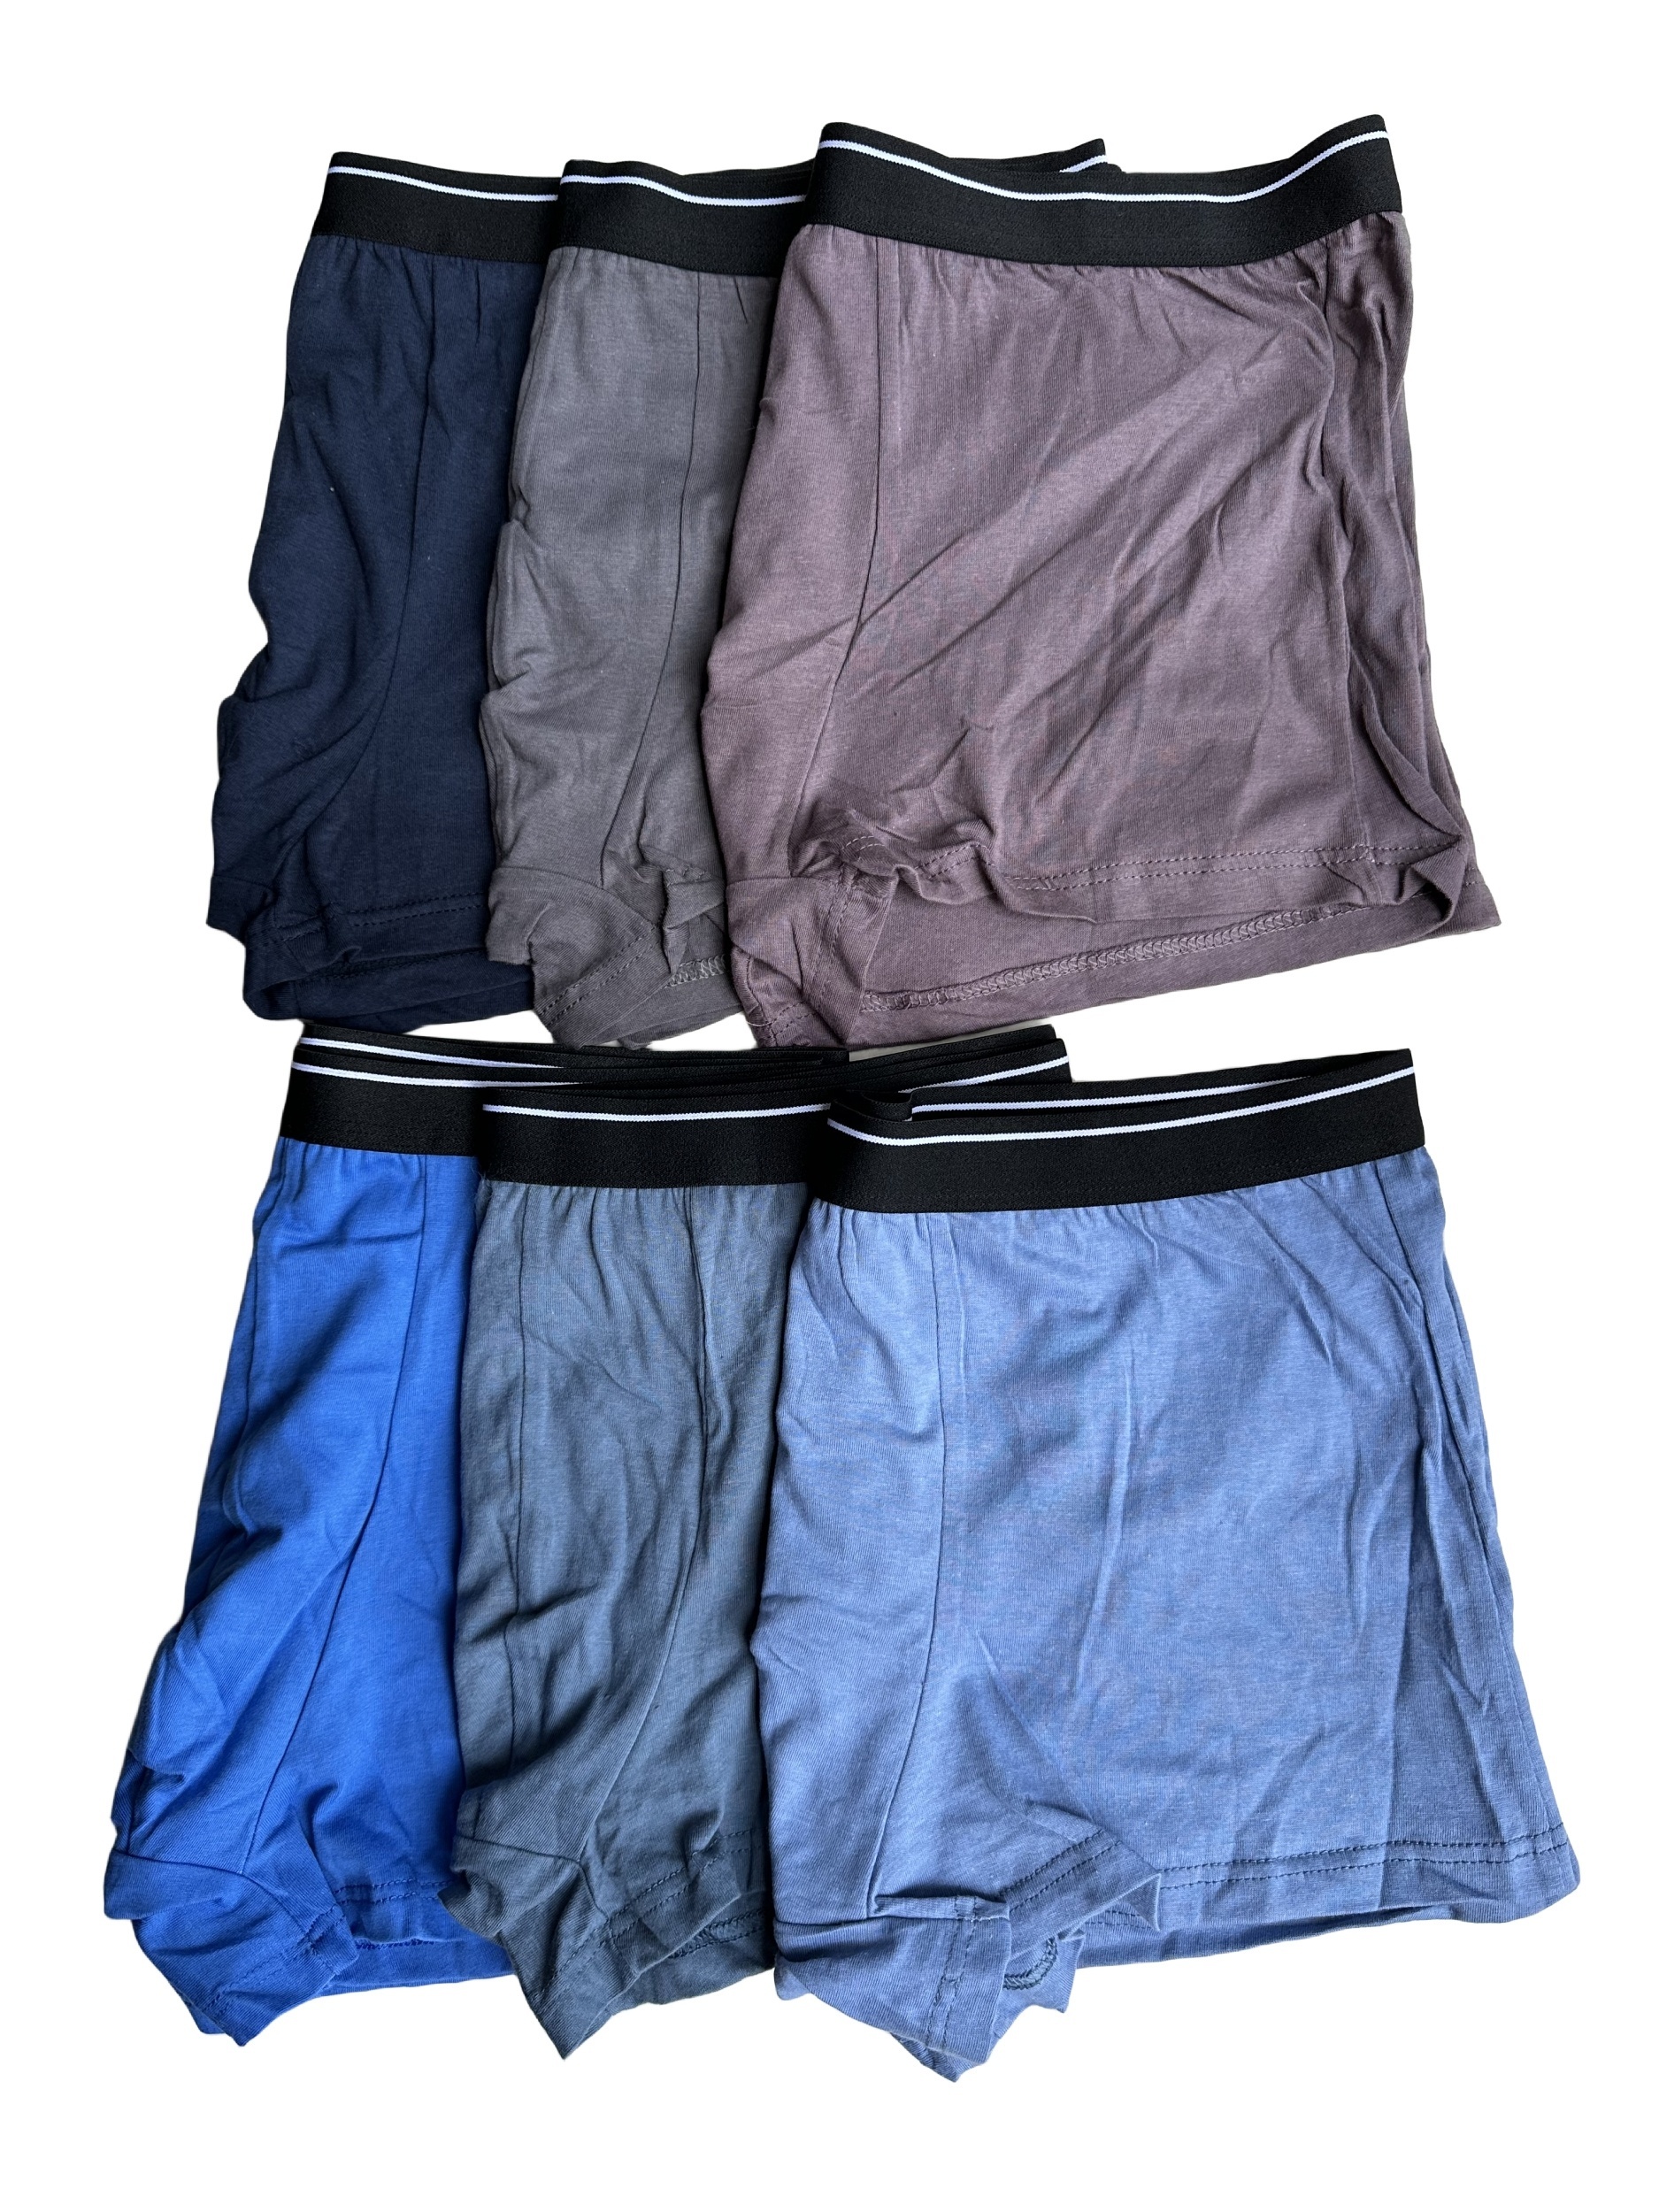 6 pc Men Solid Colors Briefs Breathable Cotton Underwear Old